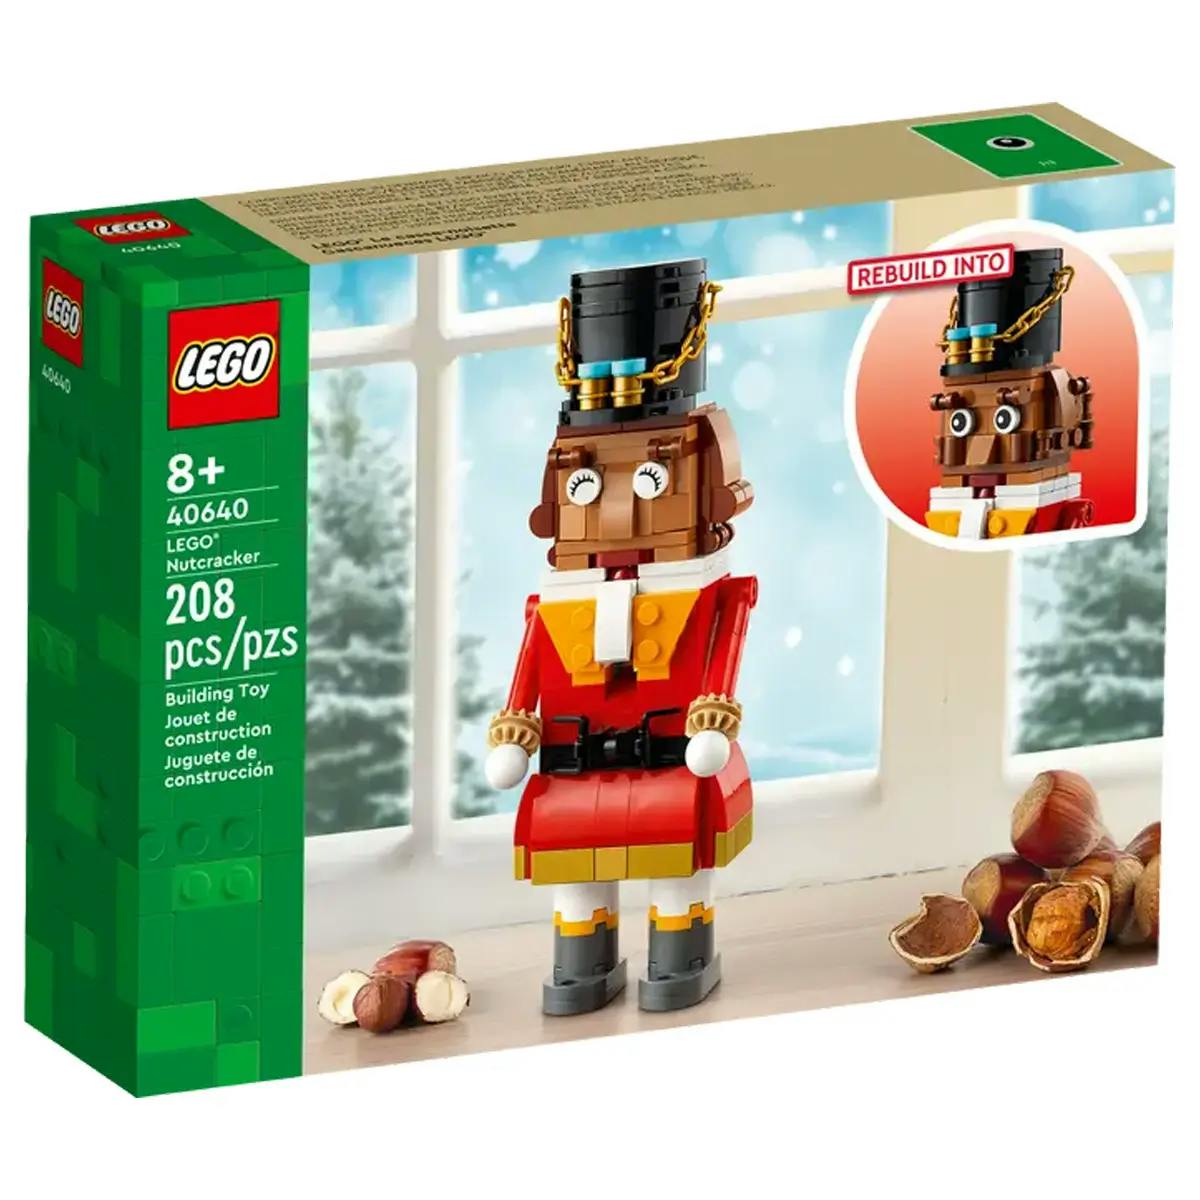 Lego box showing the 2023 Nutcracker Lego kit.